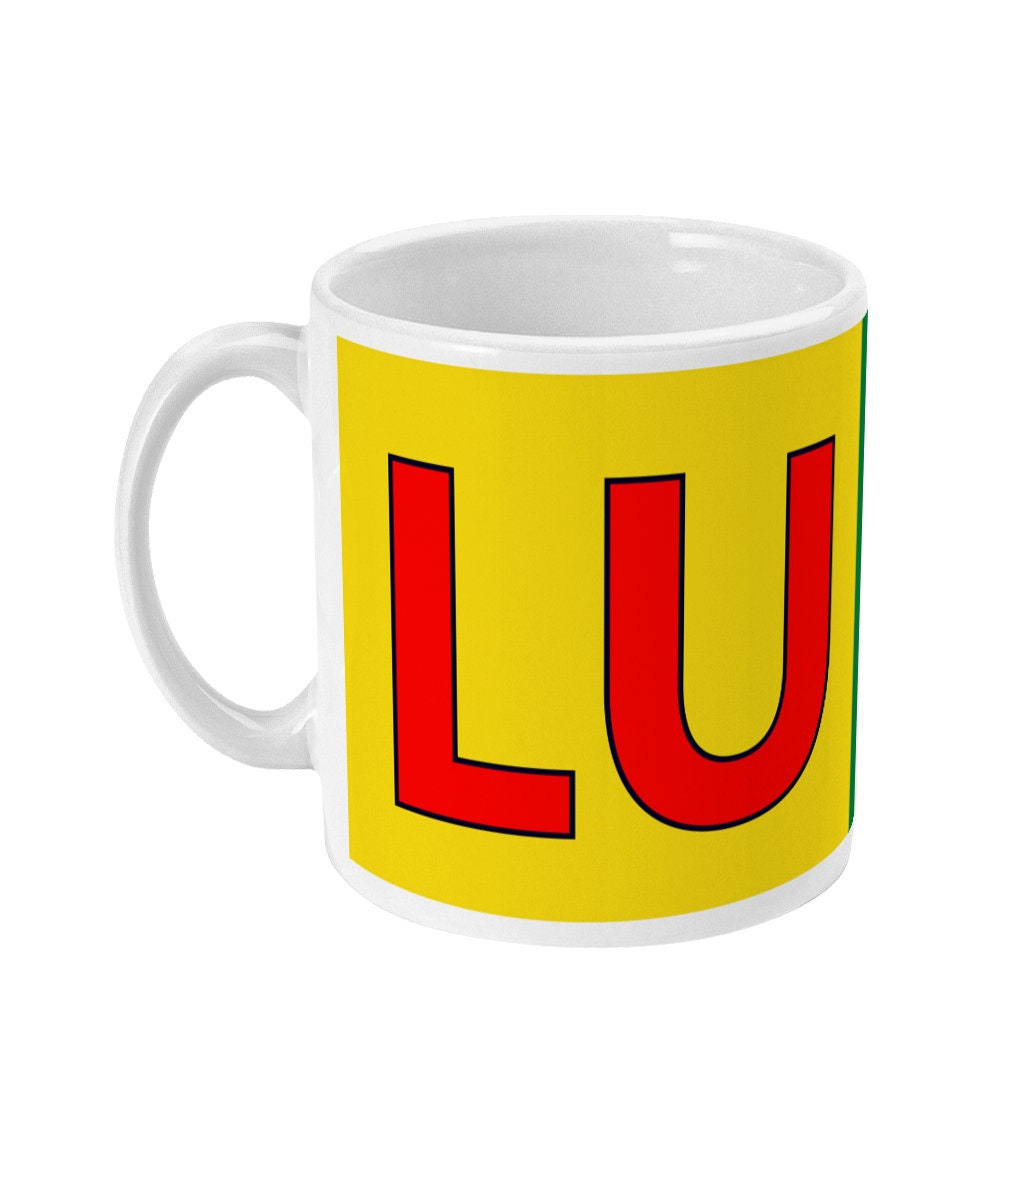 Love United Hate Glazer LUHG Mug